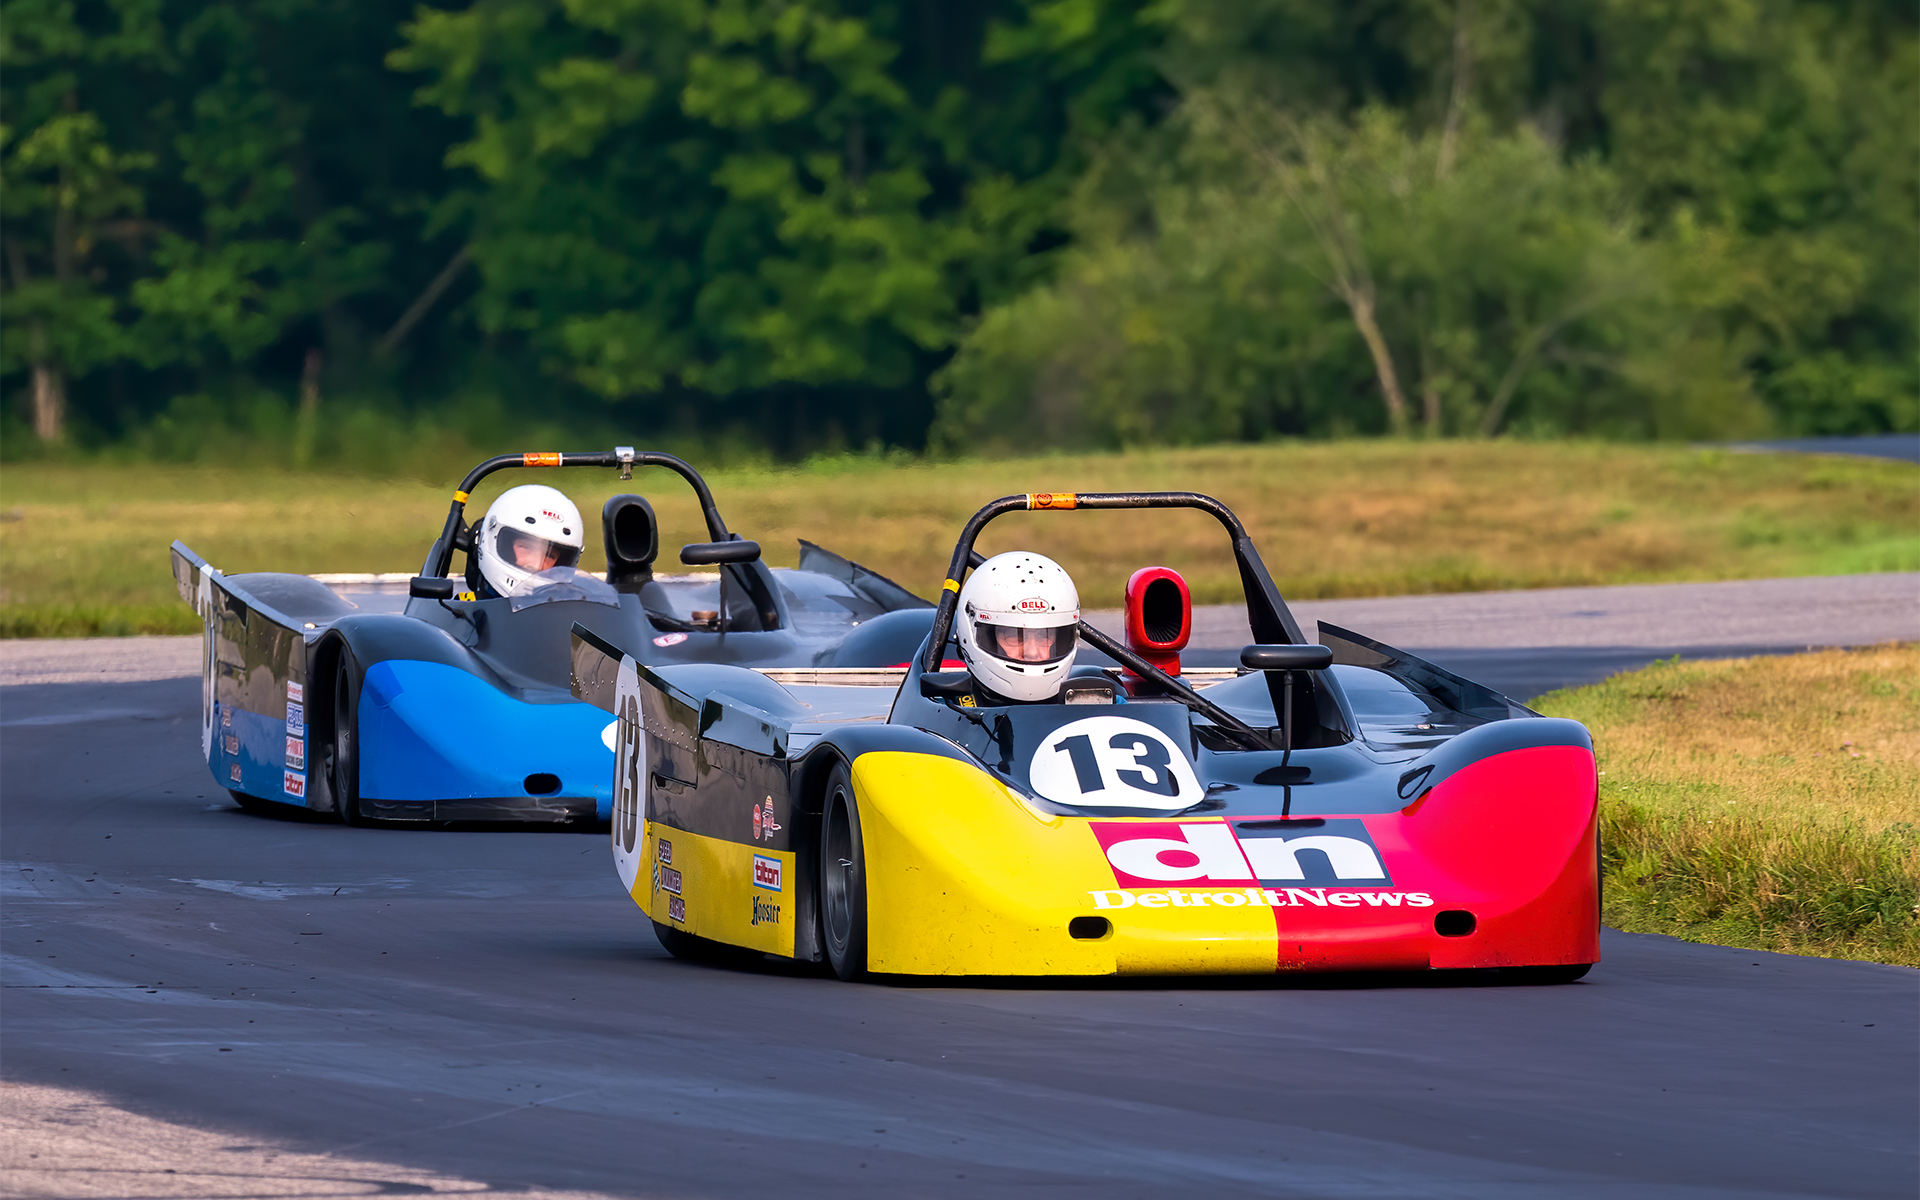 Sports cars road racing at Grattan Raceway in Michigan : Cars : Dan Sheehan Photographs - Fine Art Stock Photography